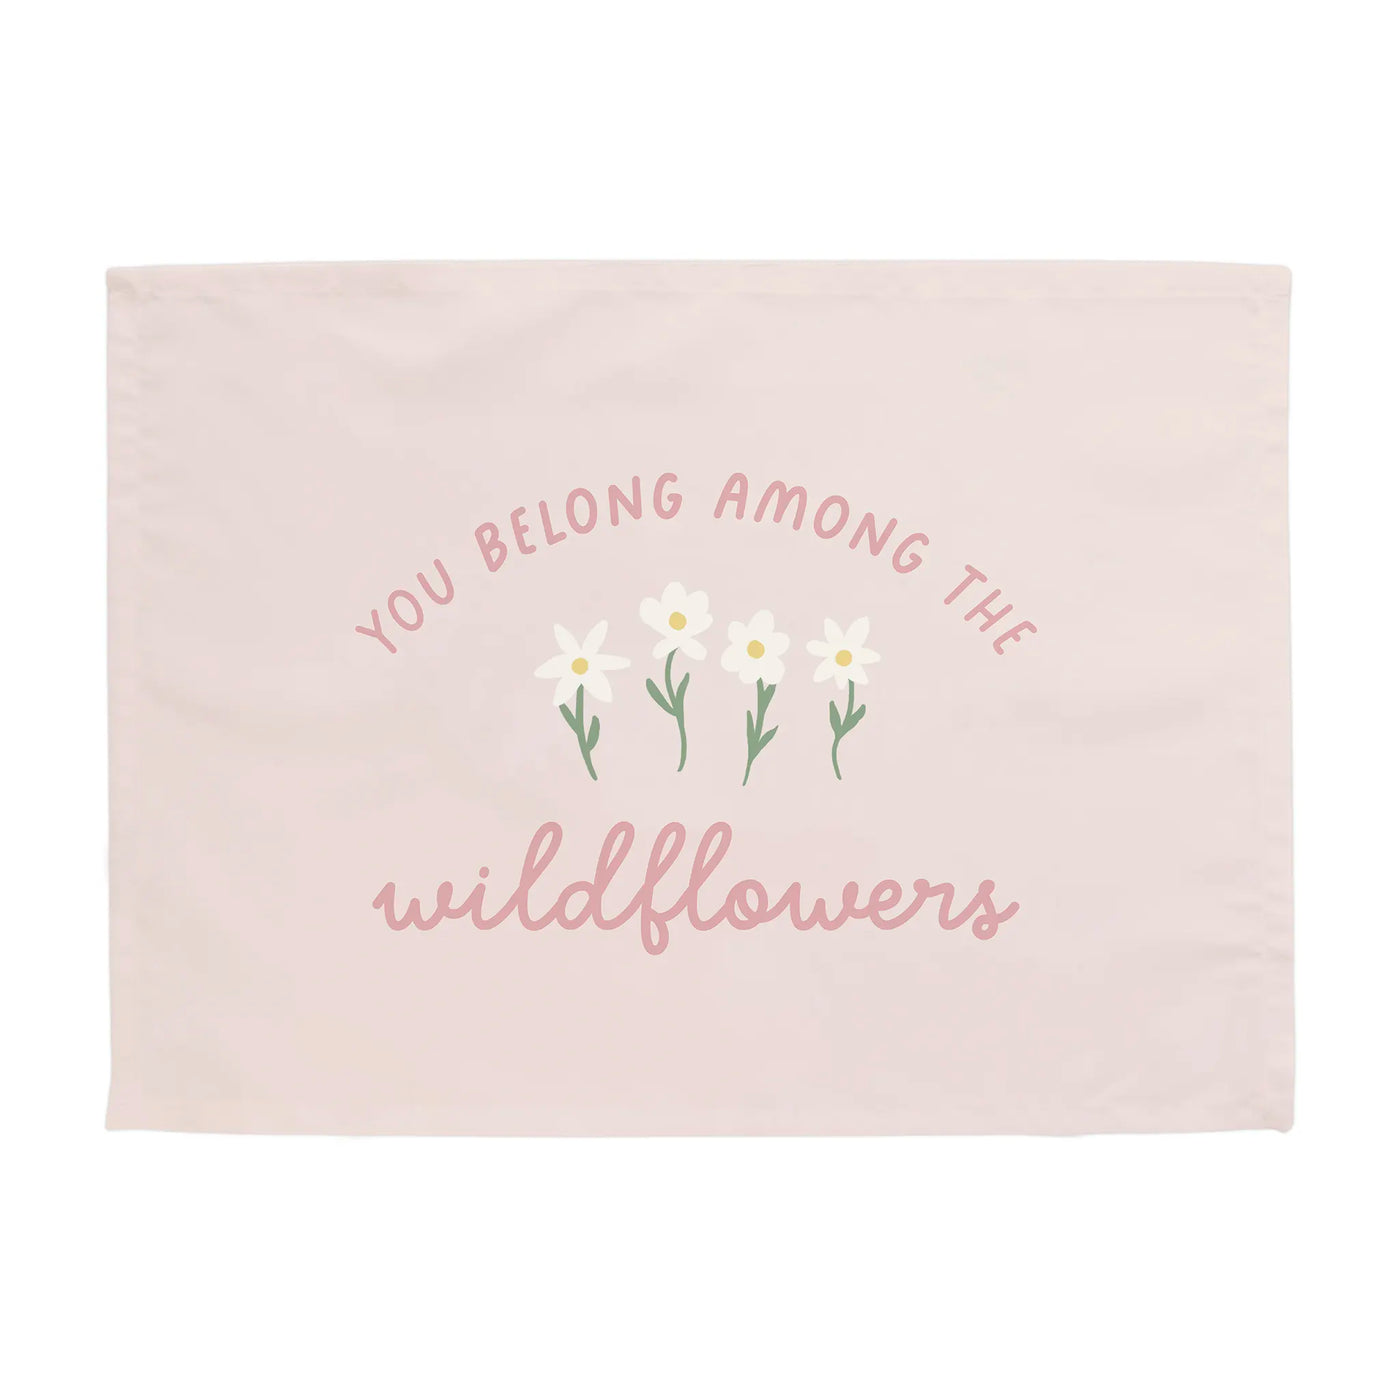 You Belong Among the Wildflowers Banner